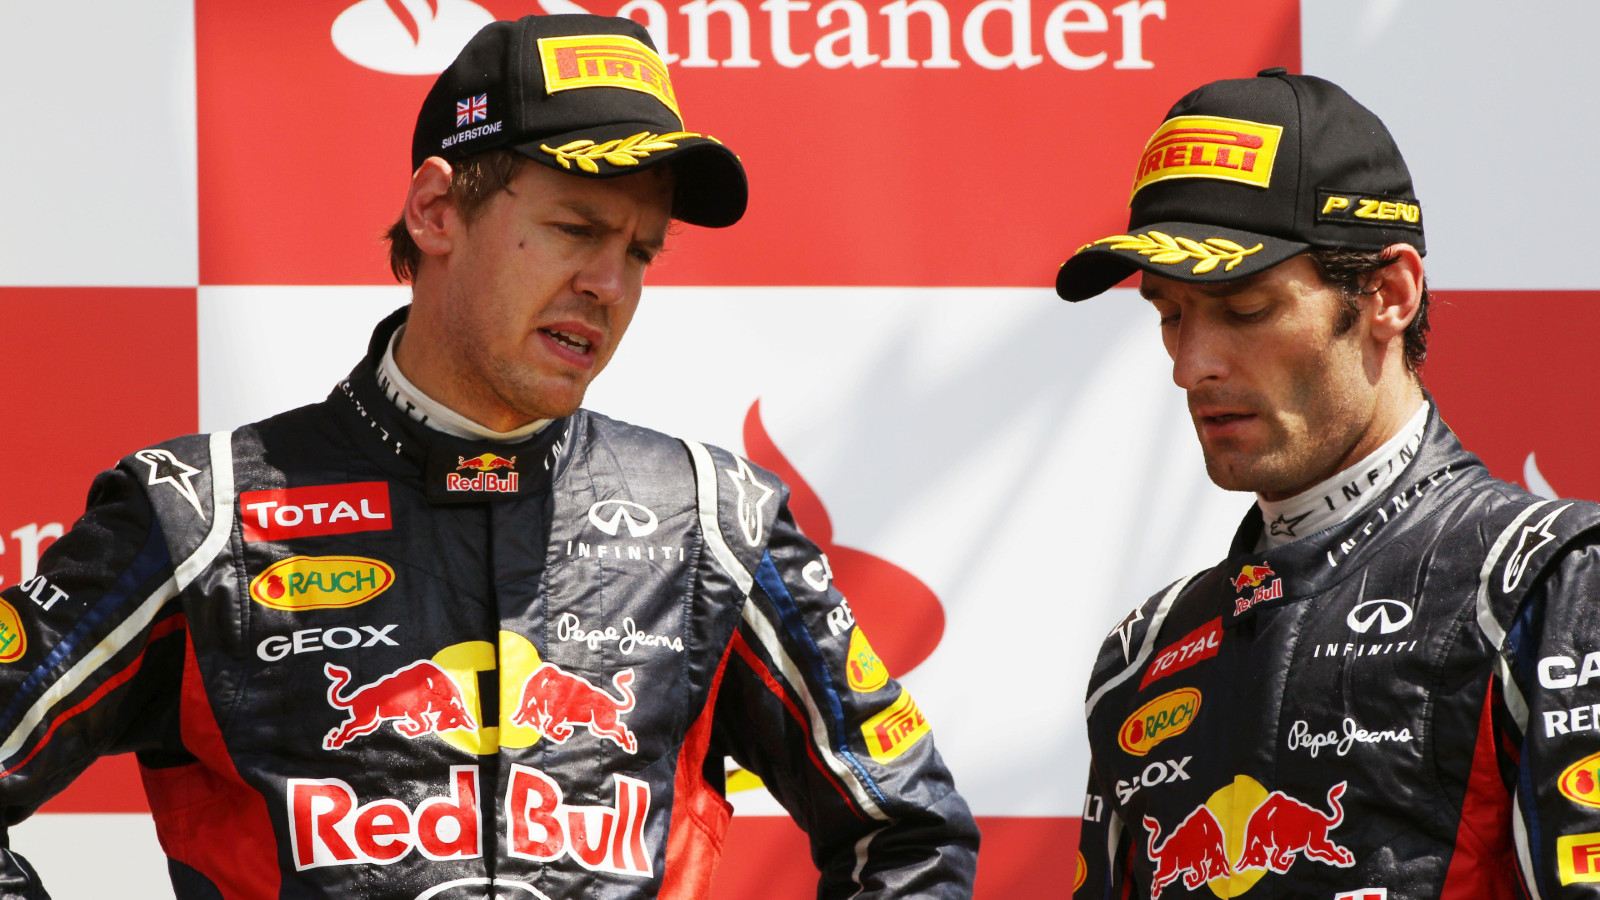 Red Bull's Mark Webber and Sebastian Vettel at the 2012 British Grand Prix. Silverstone, July 2012.